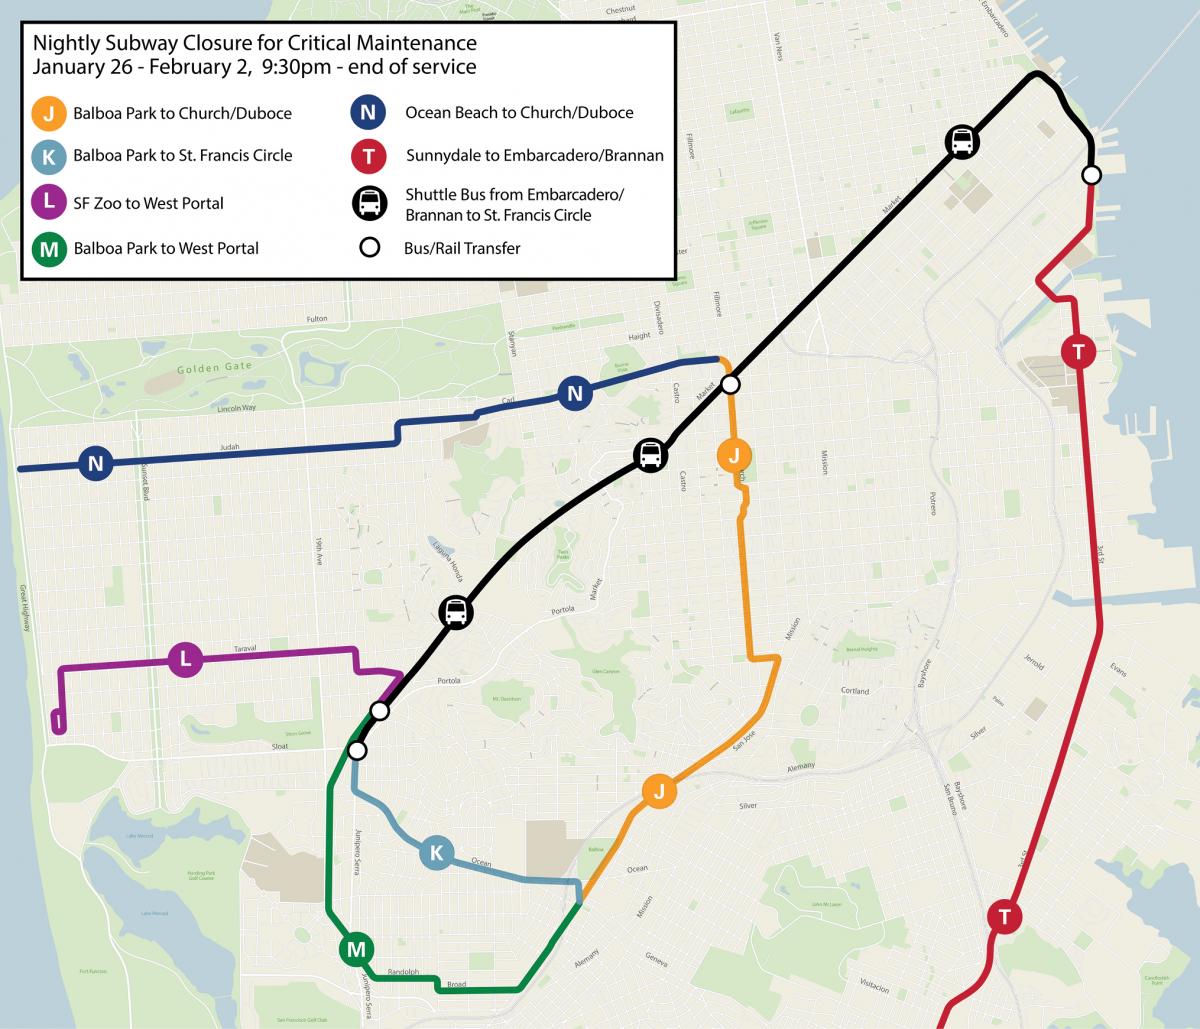 Map of Muni Metro system during nightly subway shutdowns, from 9:30 p.m. to close.